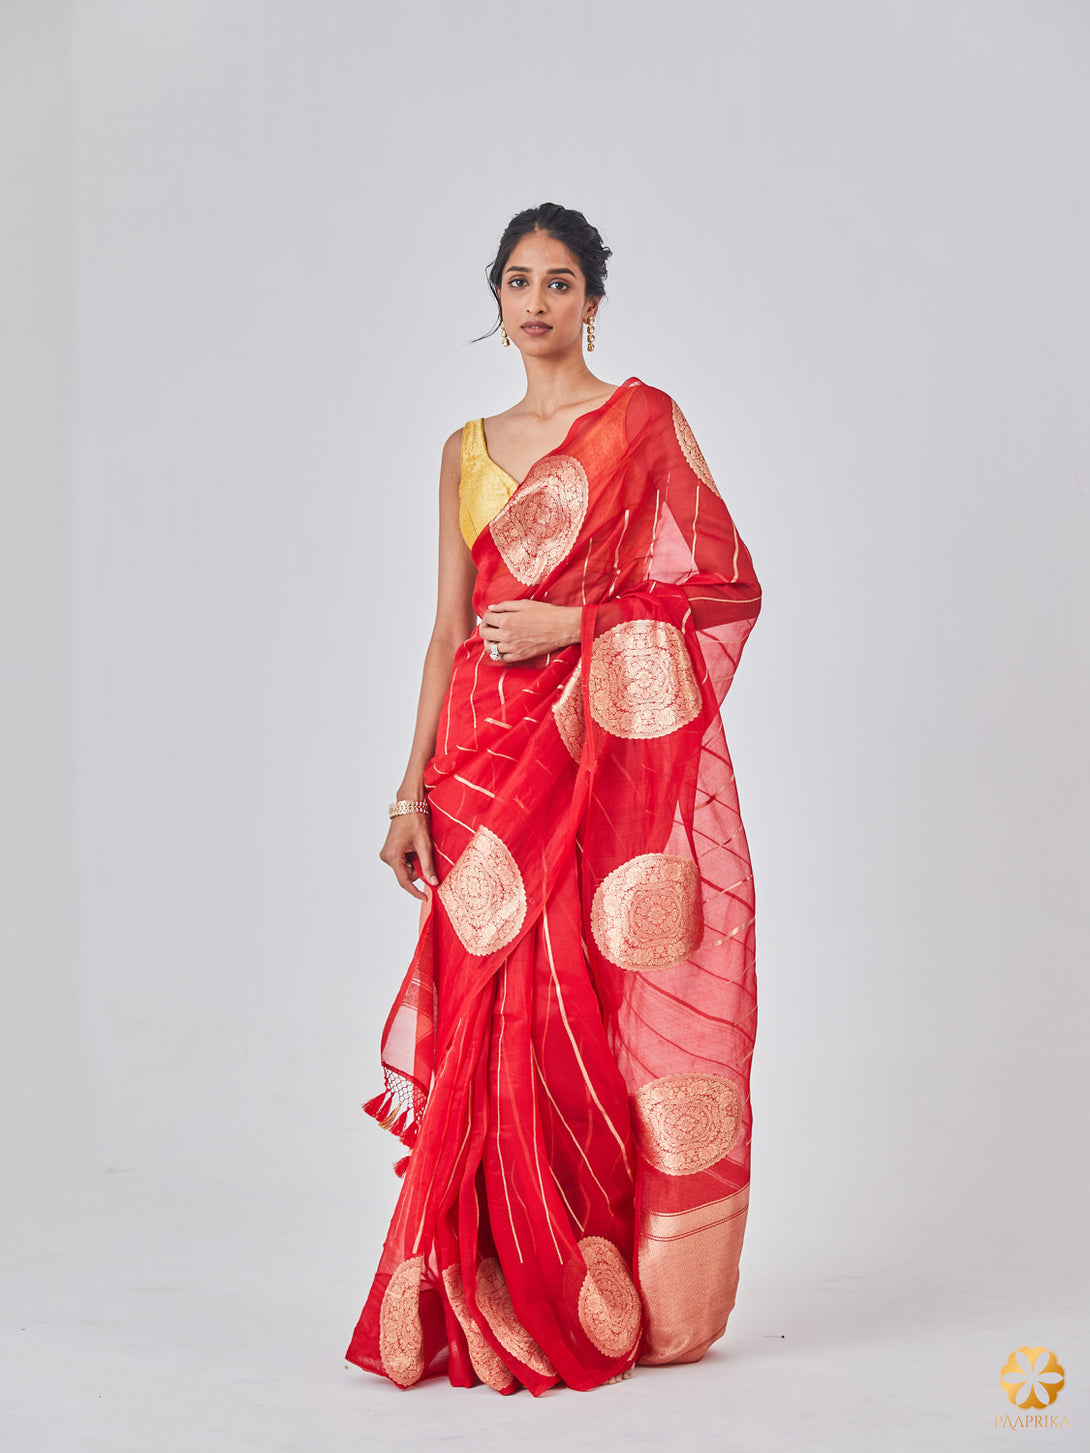 Gorgeous Hot Red Banarasi Kora Organza Saree - Elegance and Allure Unveiled.